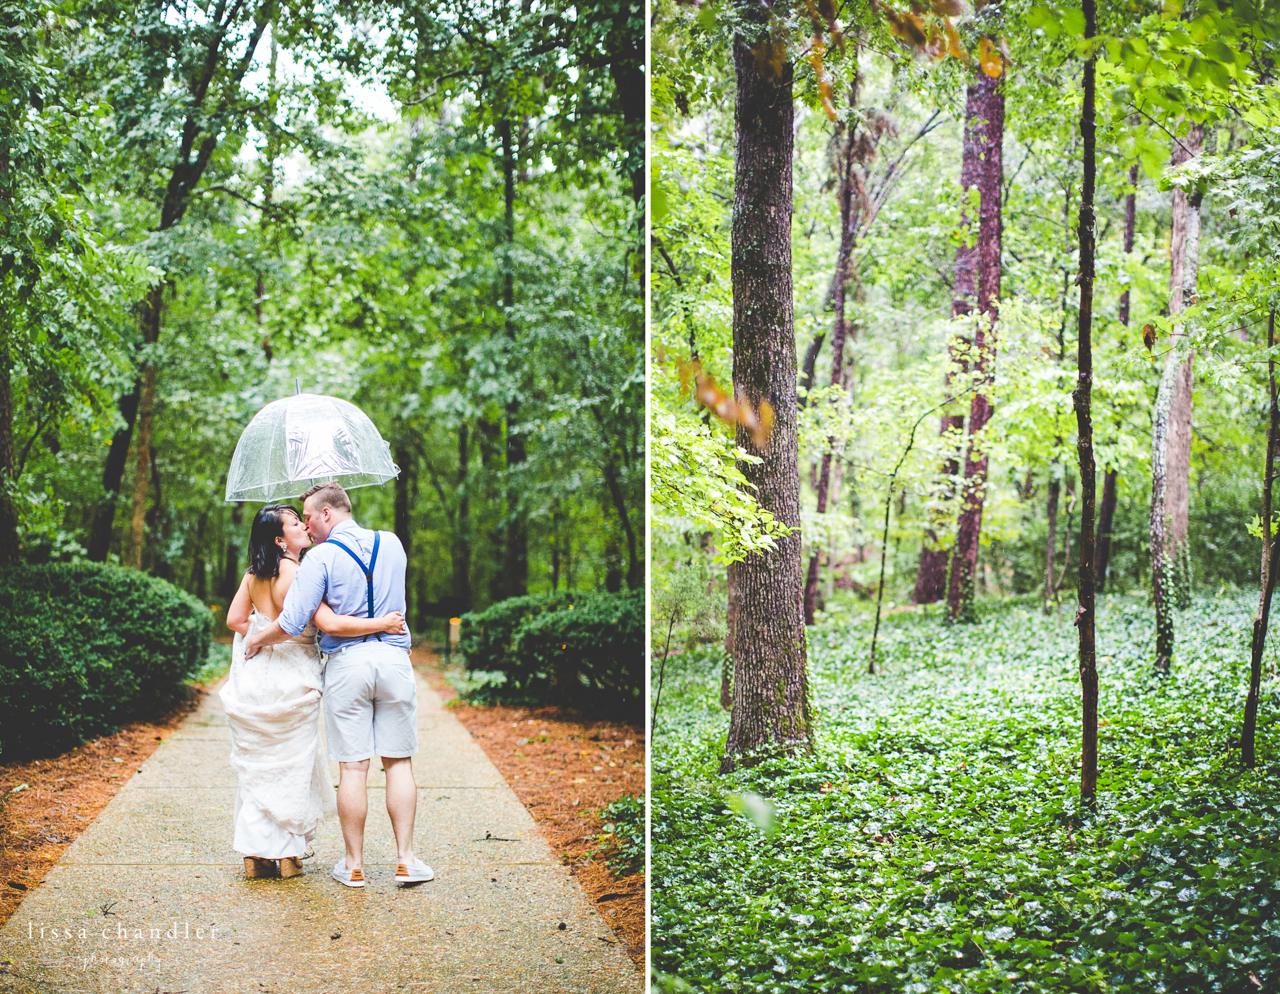 Fall Wedding In Arkansas, Lissa Chandler Photography